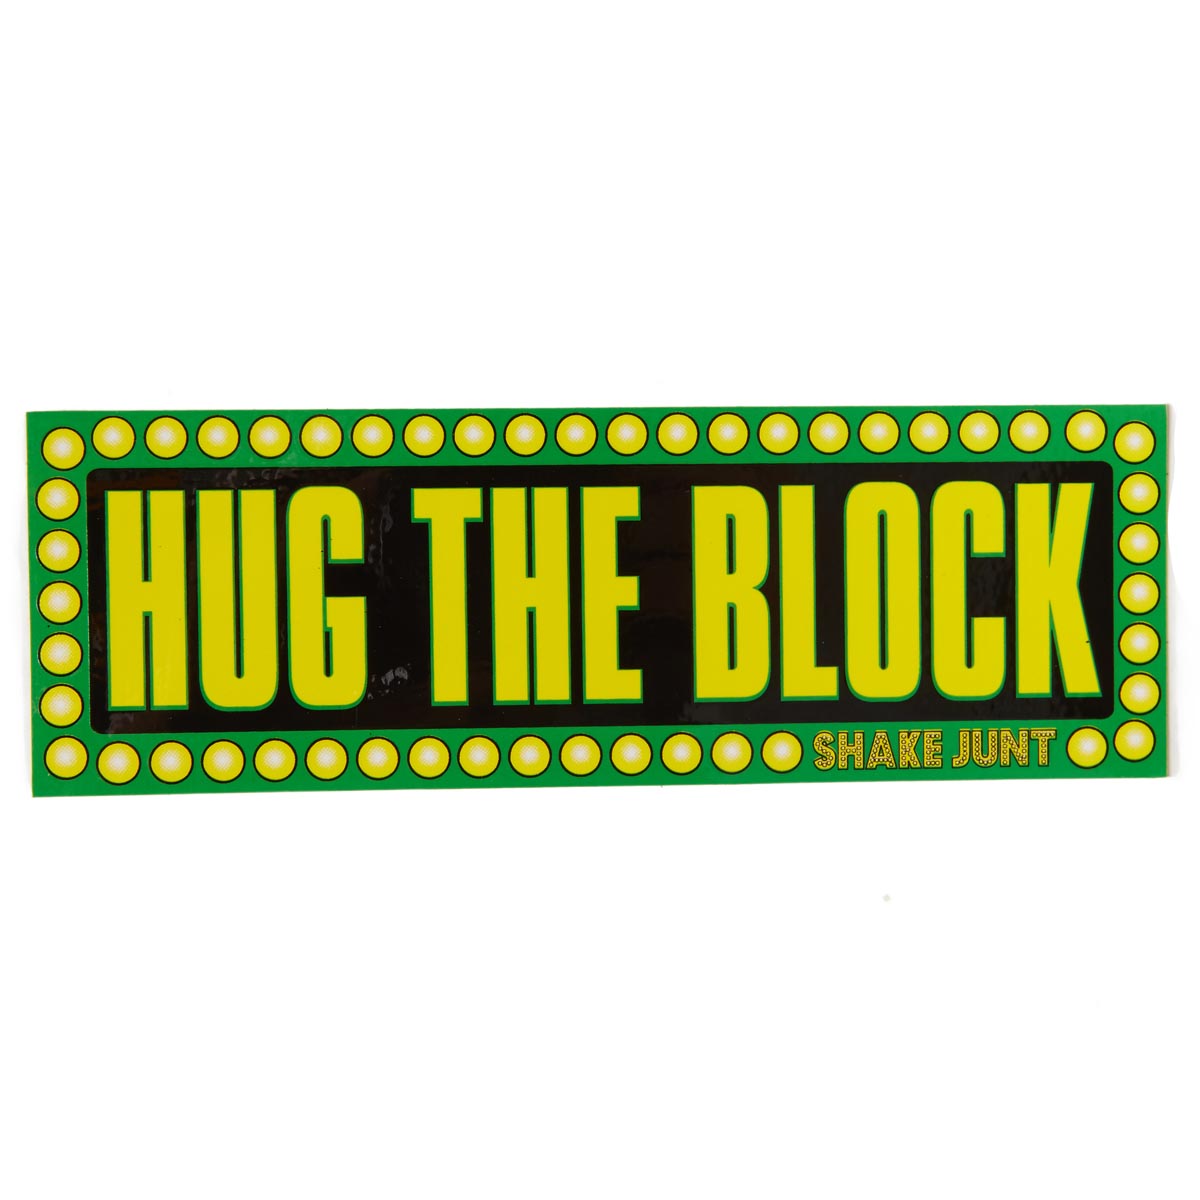 Shake Junt Bumper Sticker - Hug The Block image 1